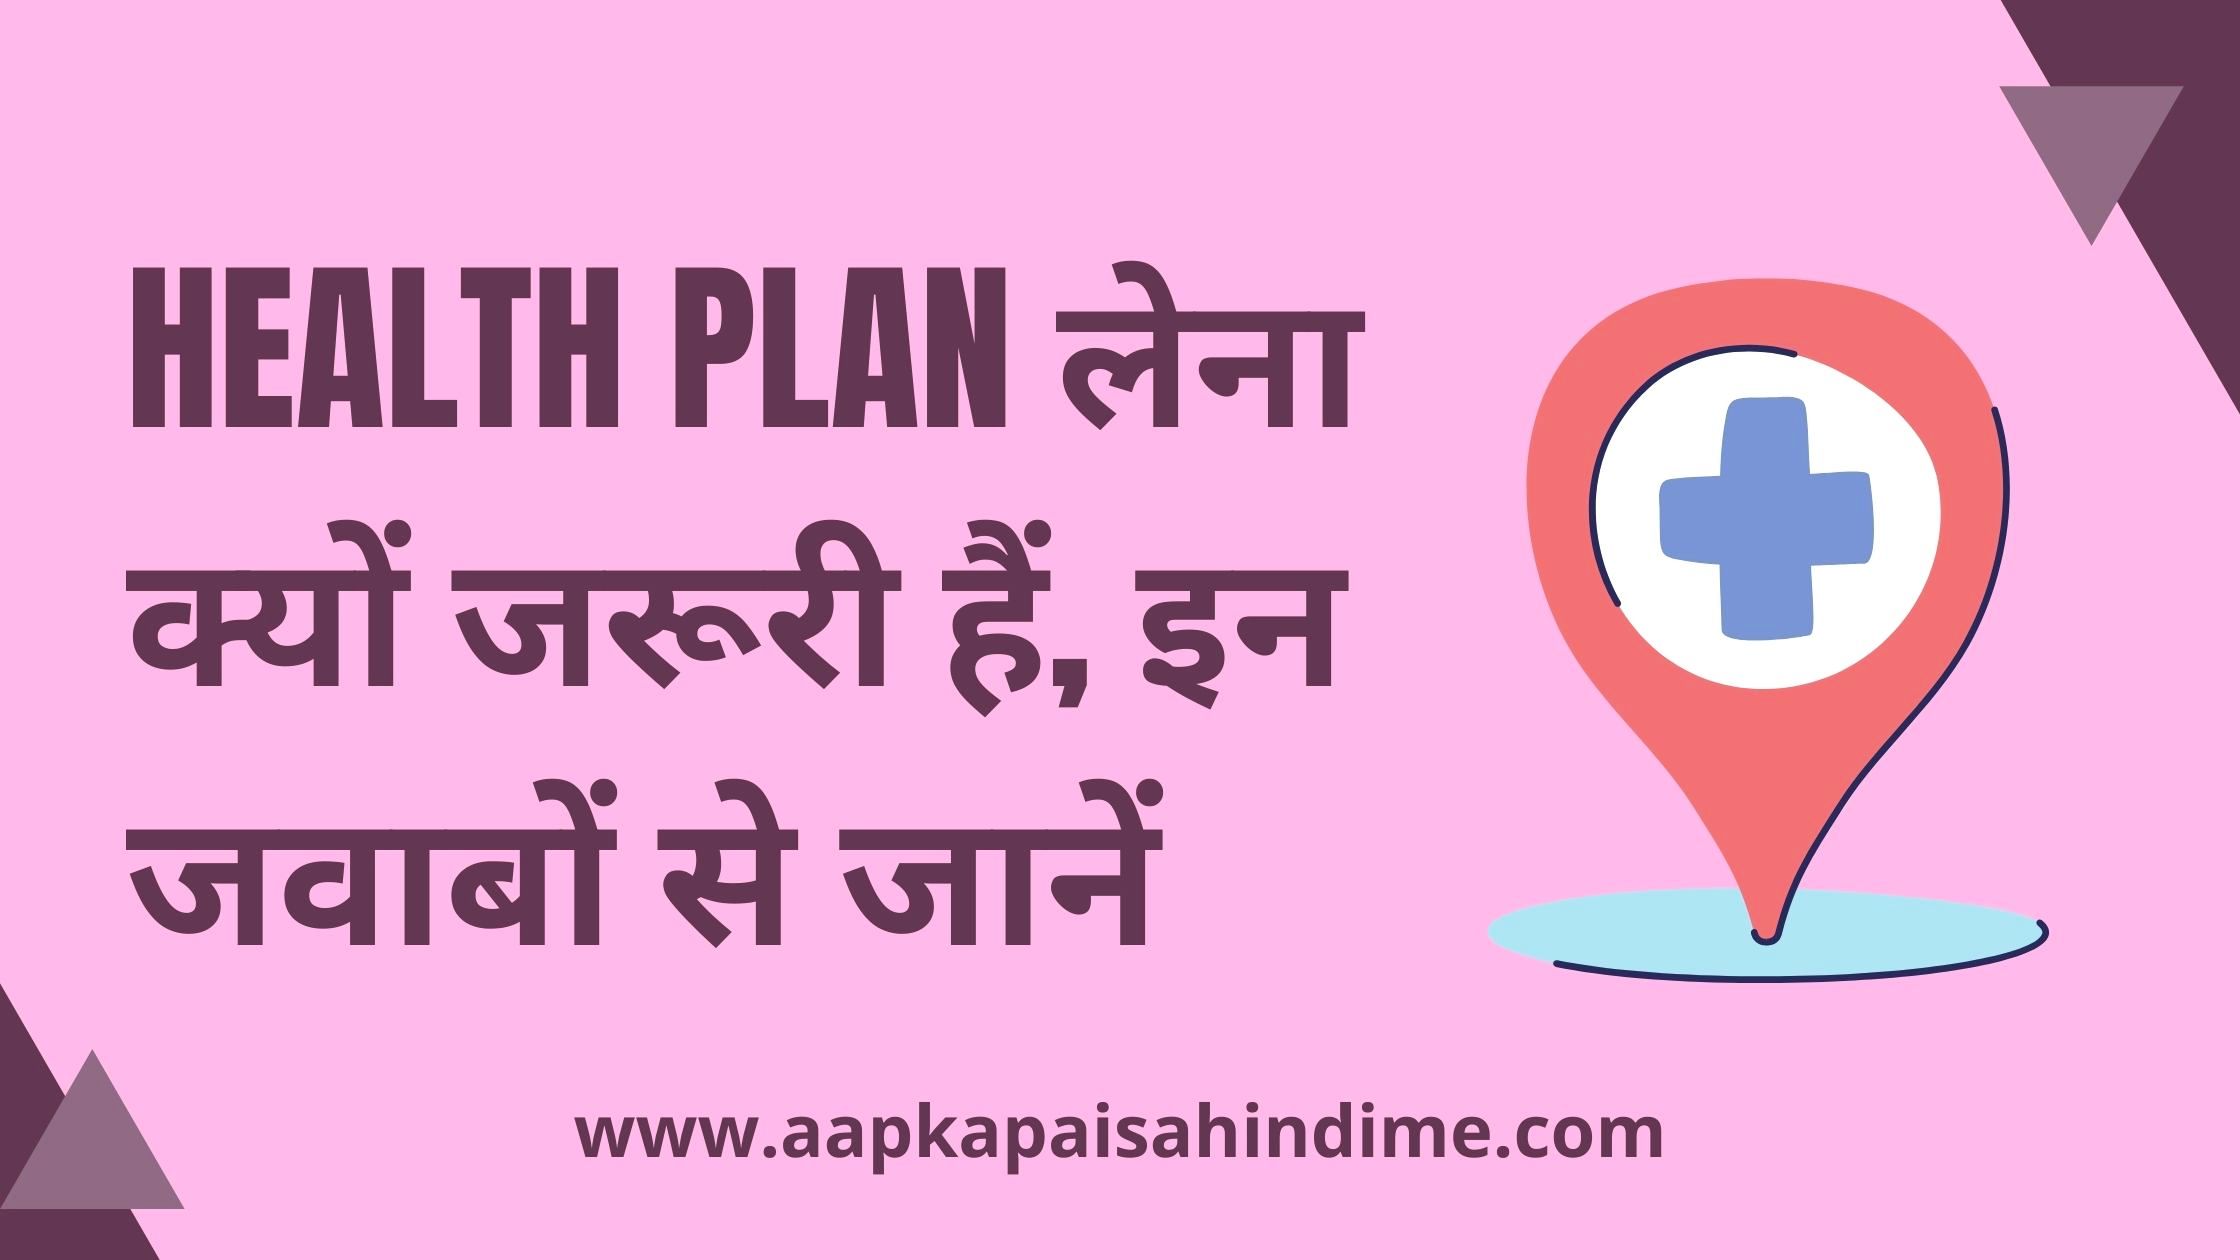 Health plan